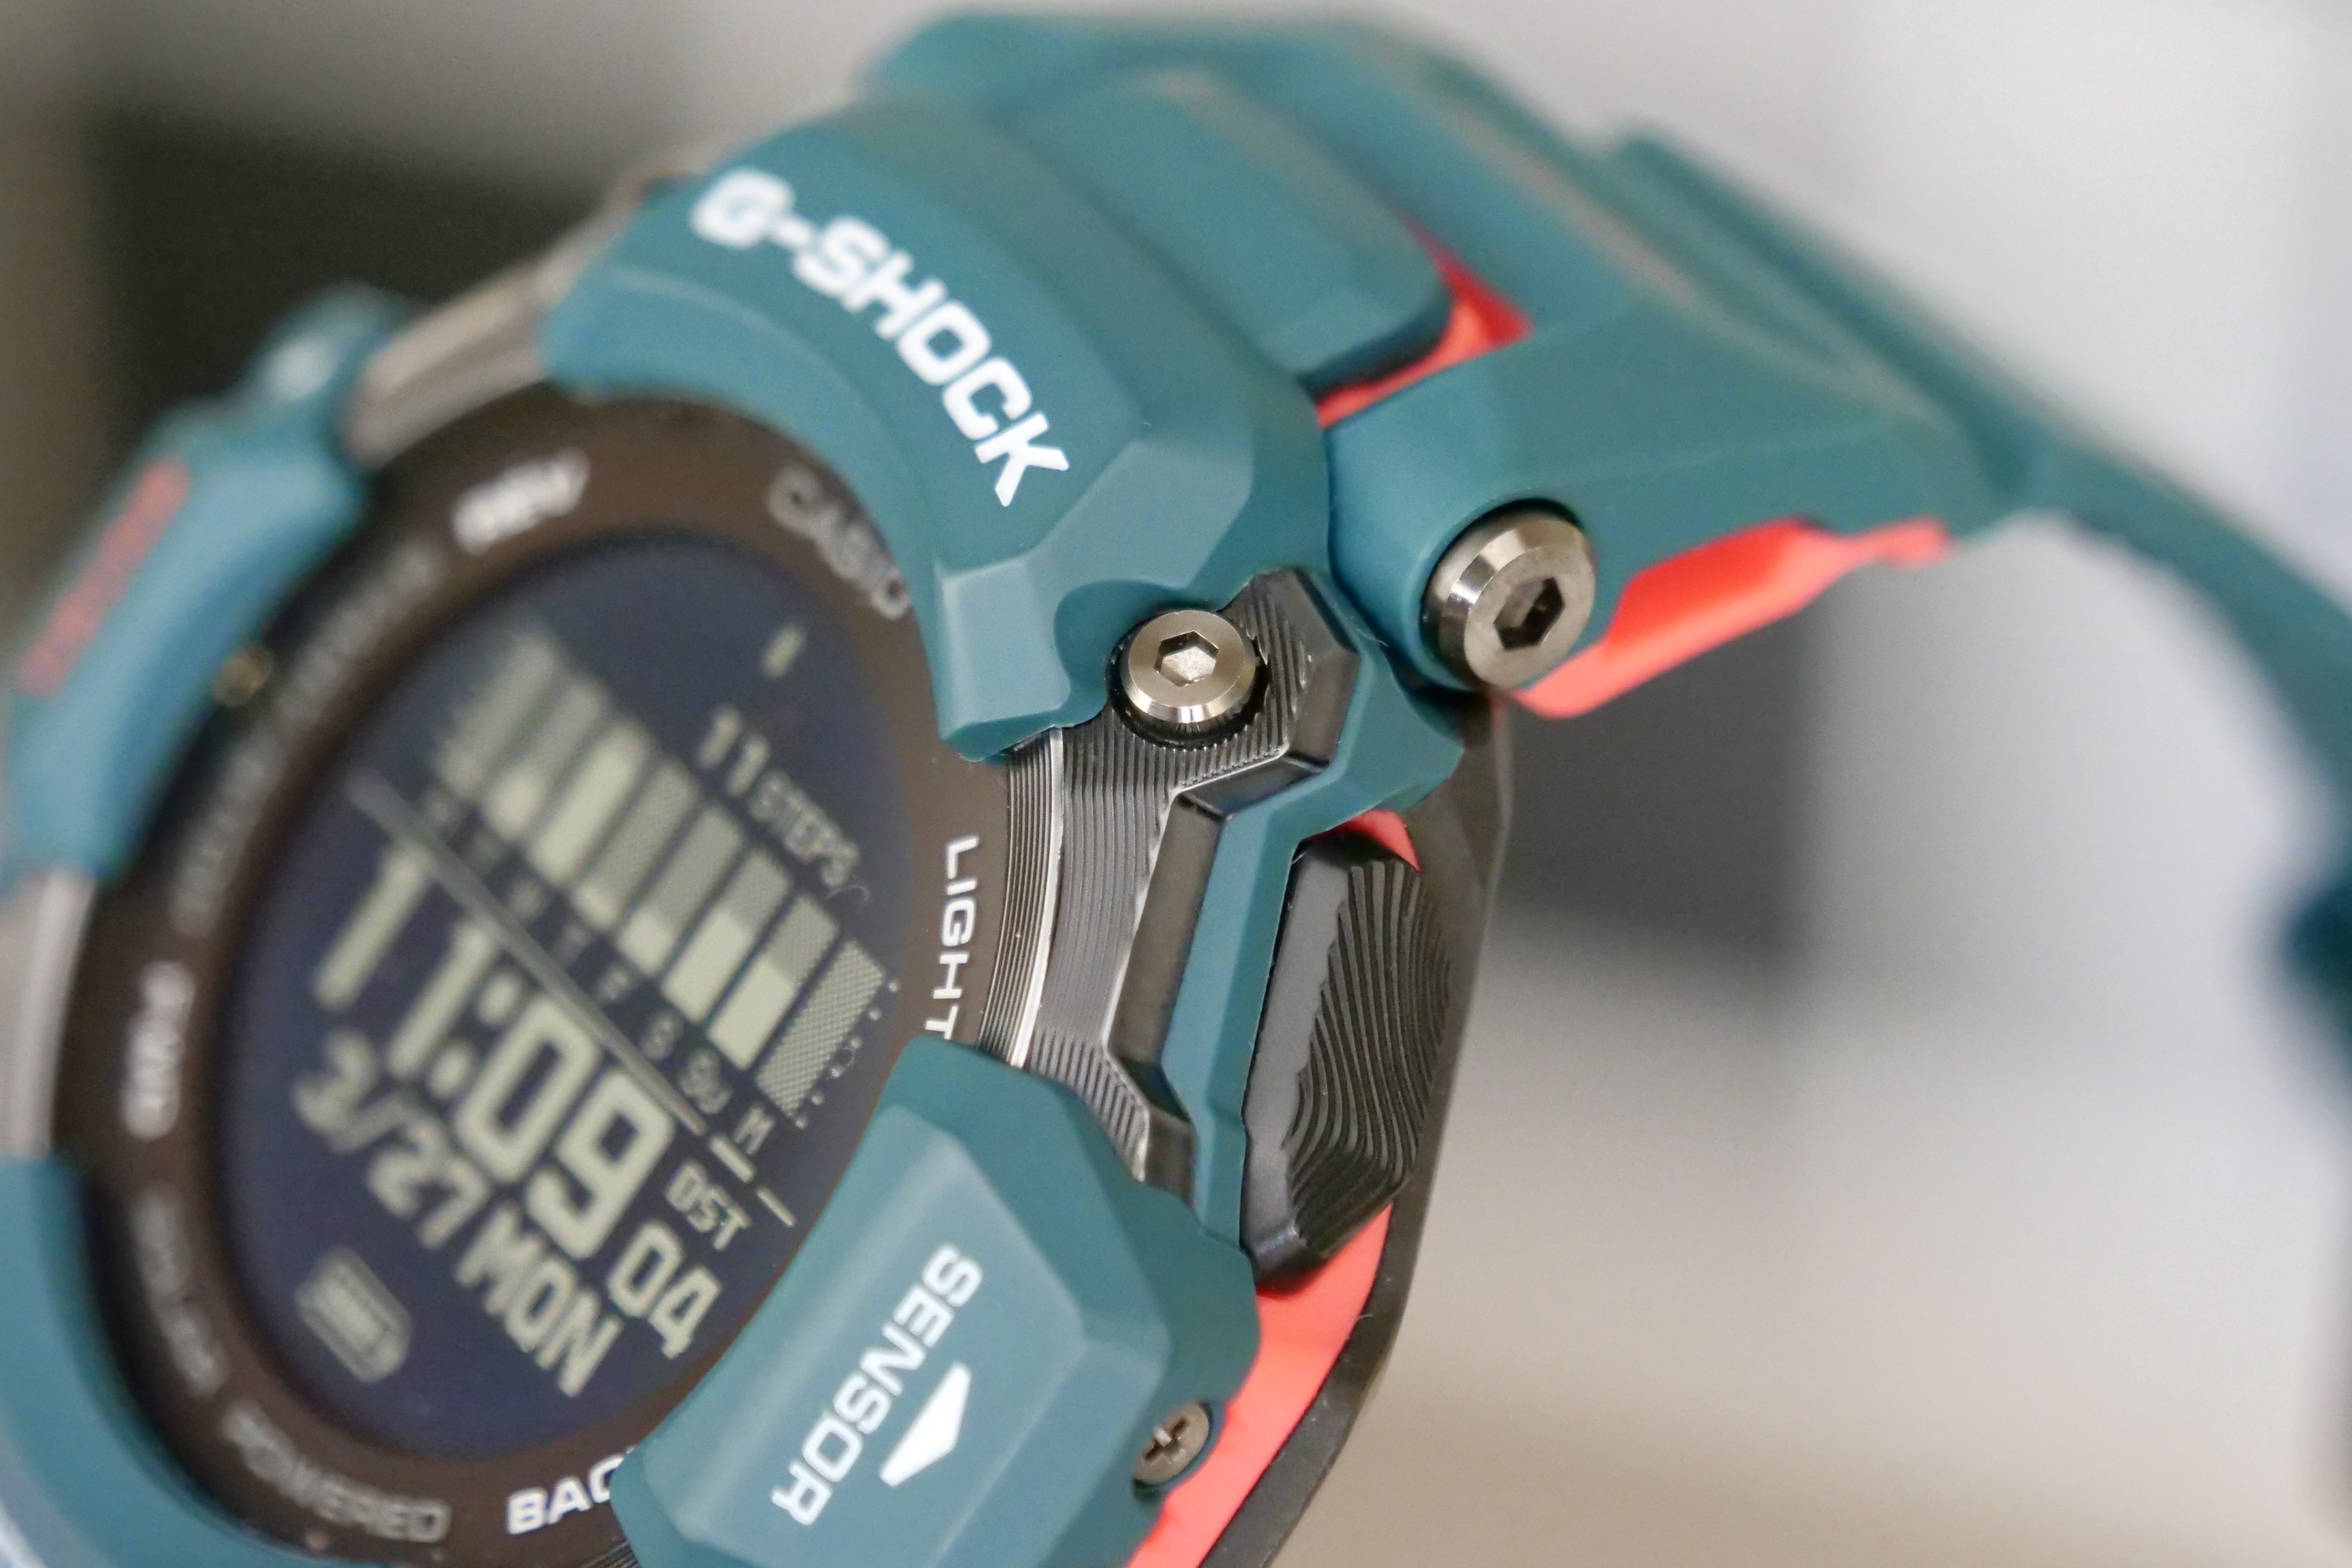 everlasting review: Trends Digital smartwatch G-Shock GBD-H2000 | hybrid the